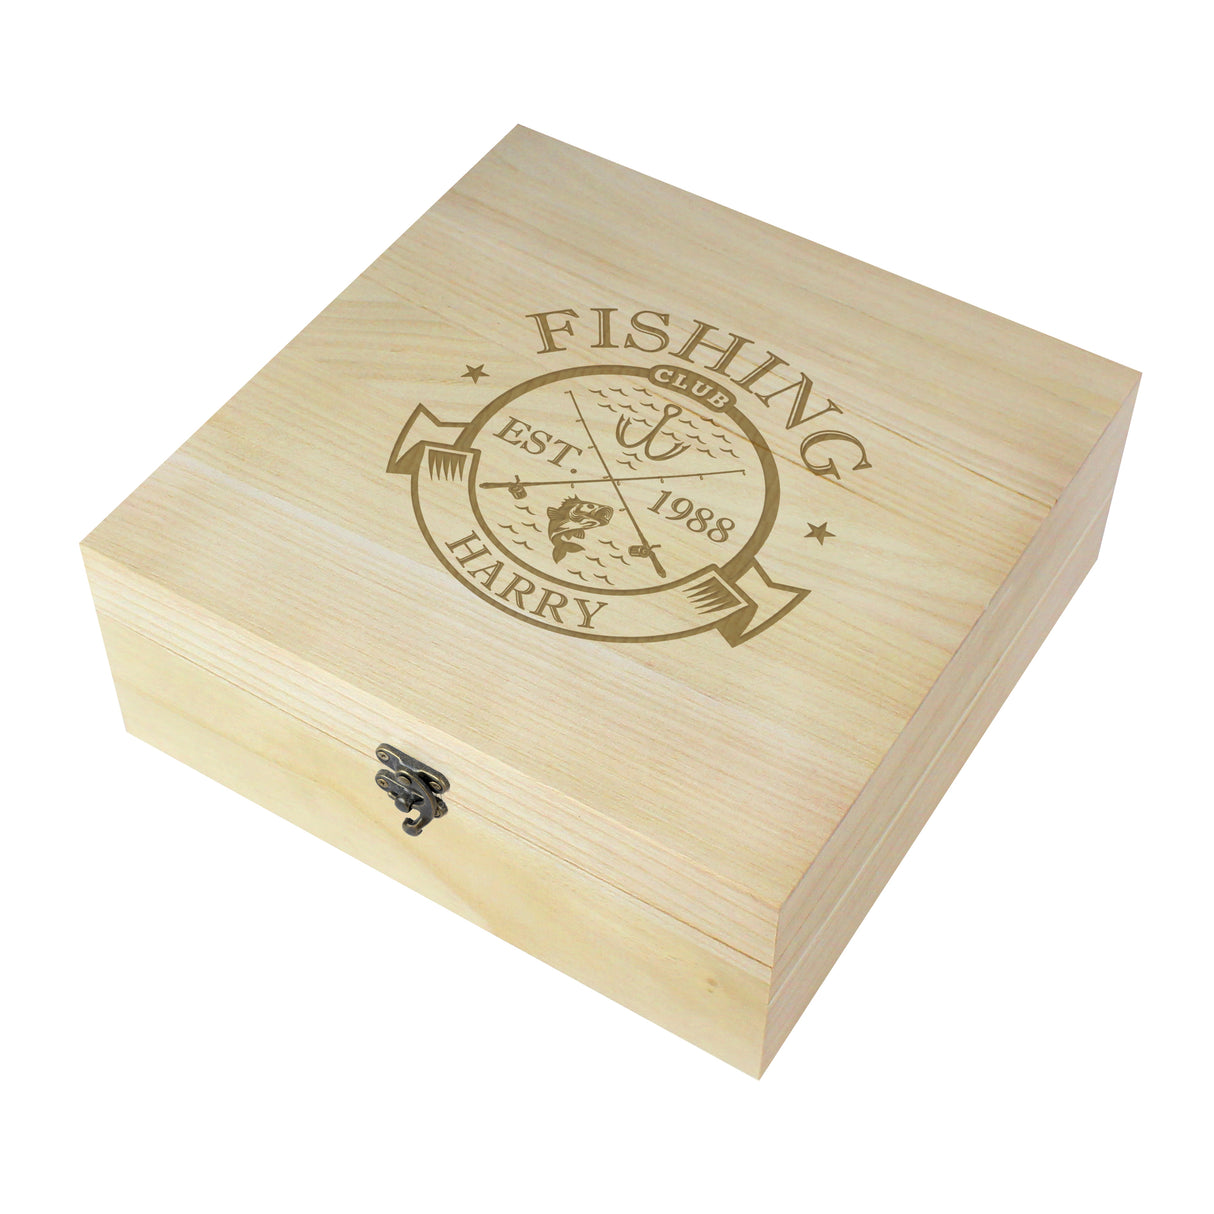 Fishing Club Wooden Keepsake Box - Gift Moments